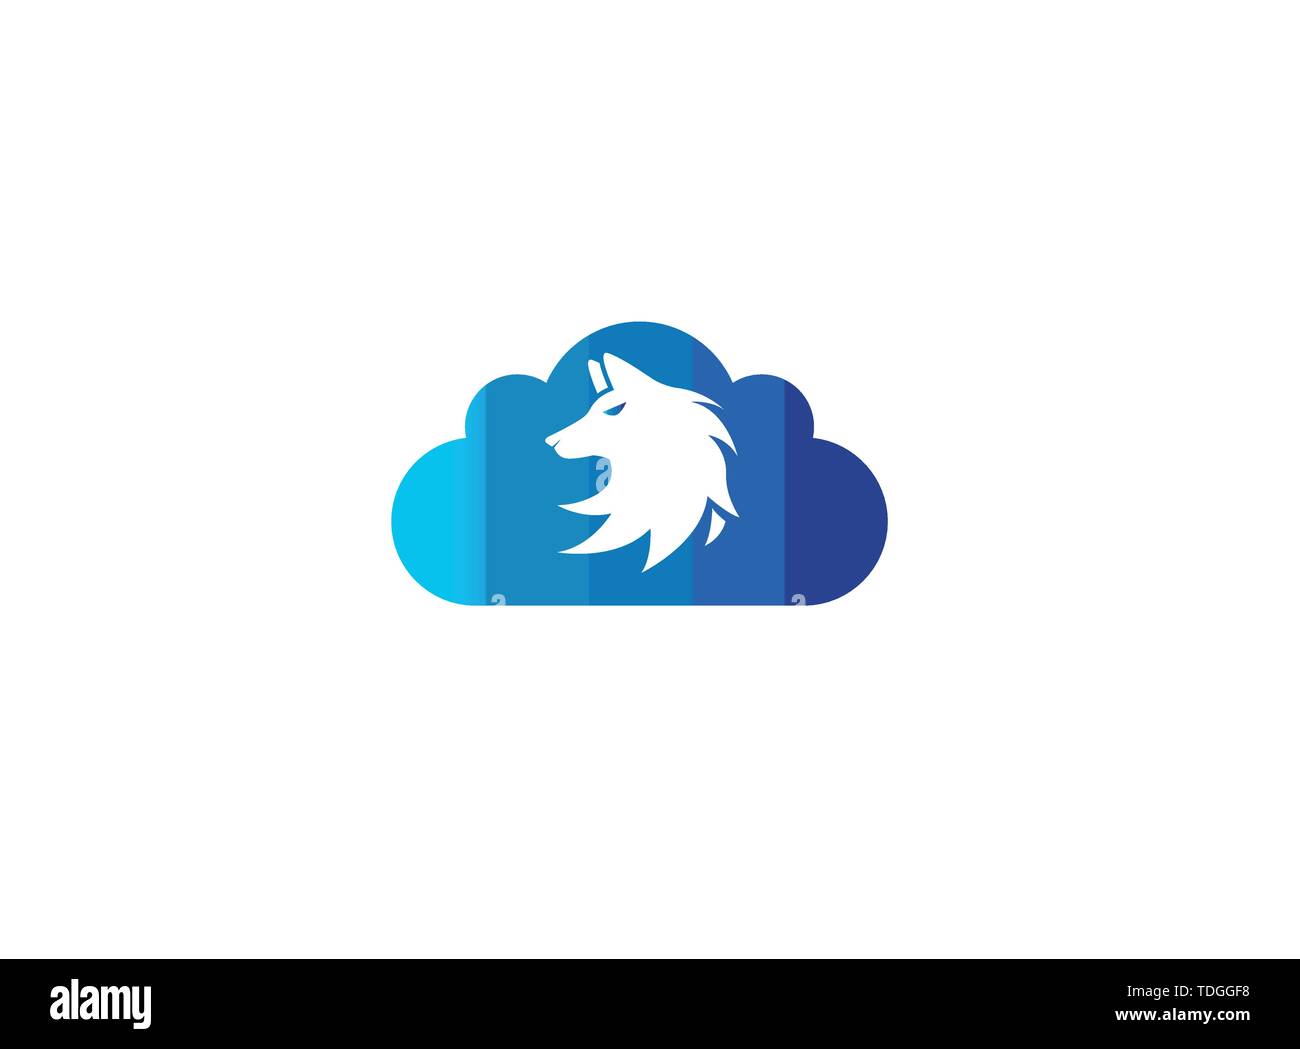 Wolf head logo fox face illustration design illustration in a cloud shape icon Stock Vector